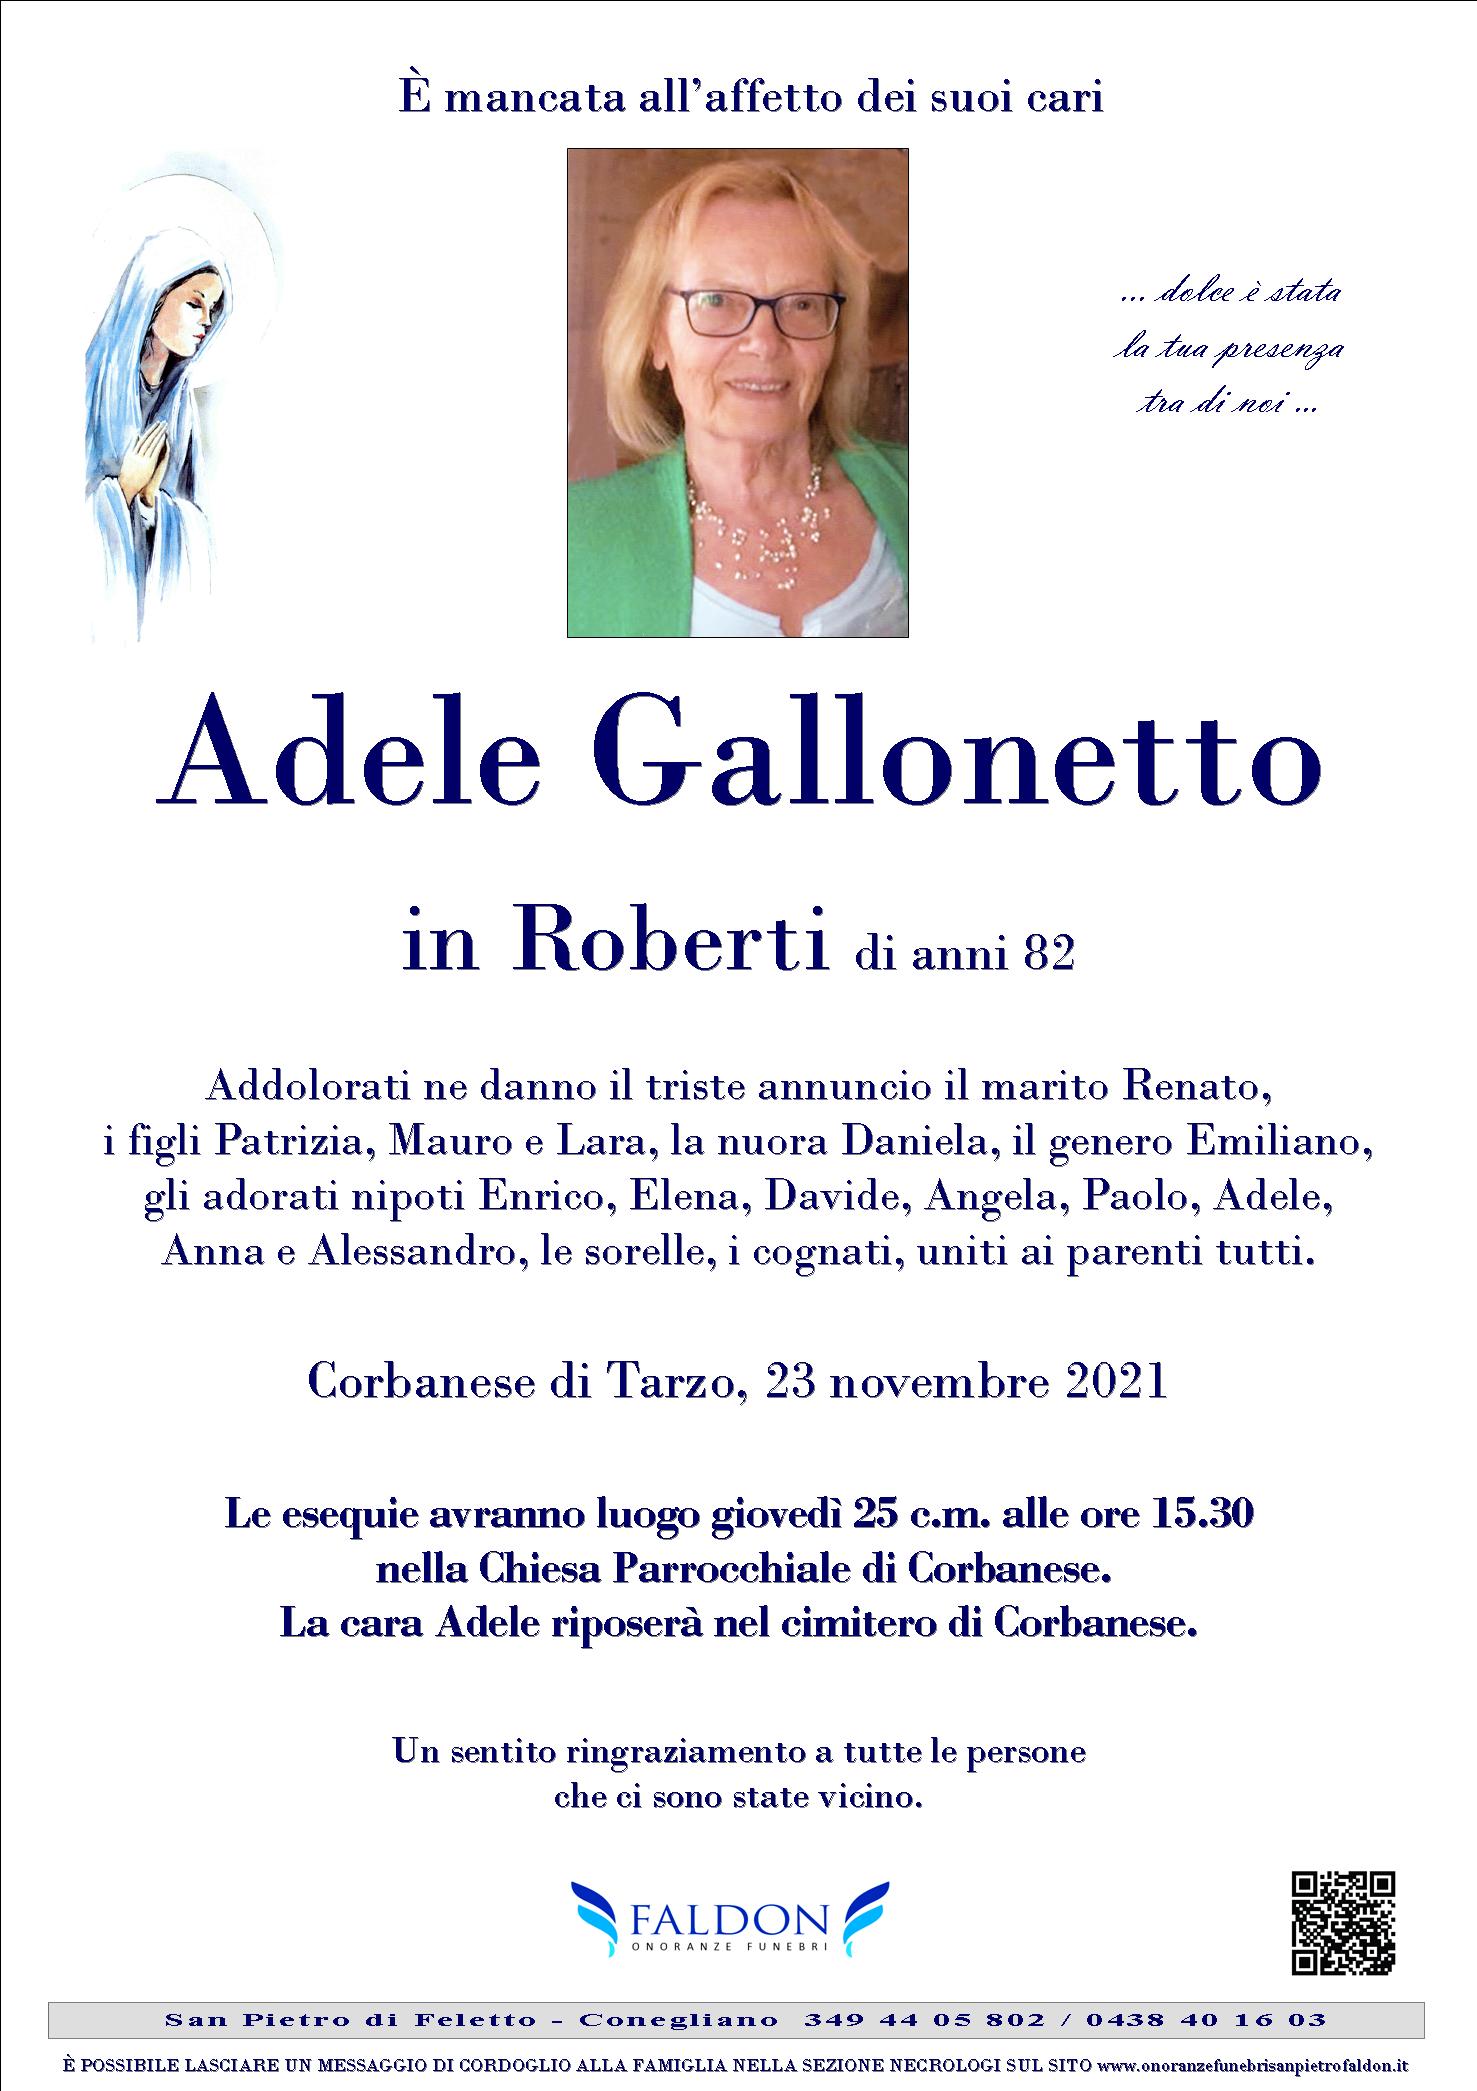 Adele Gallonetto